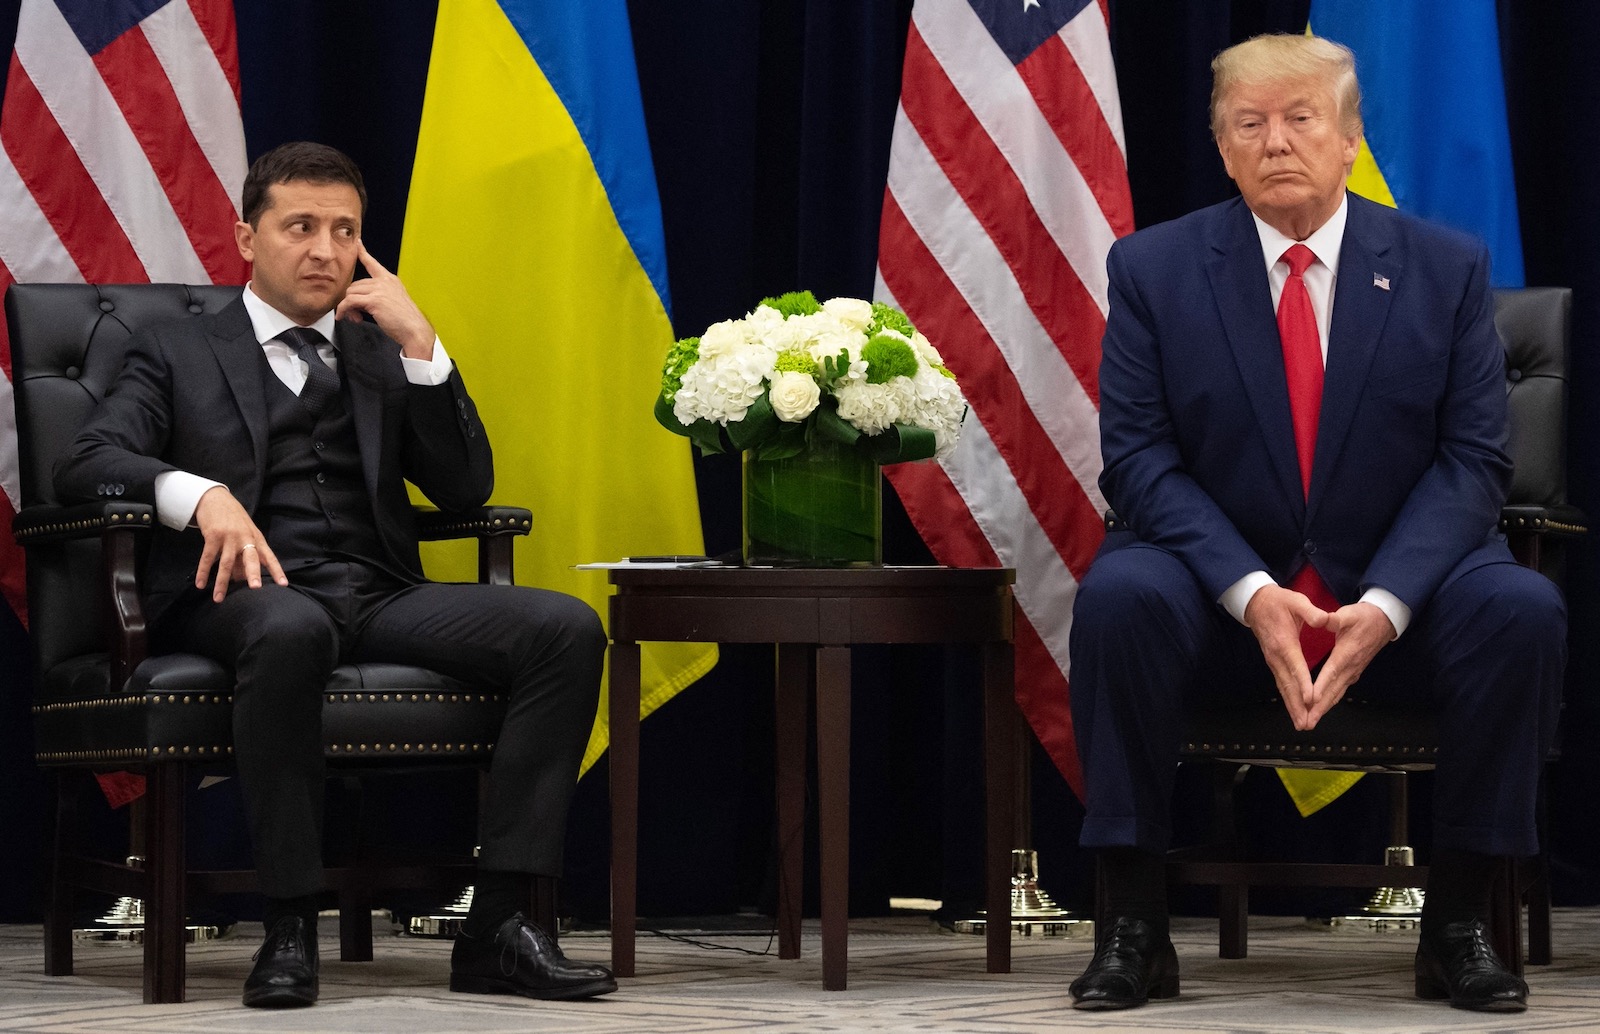 President Donald Trump meeting with Ukrainian President Volodymyr Zelensky